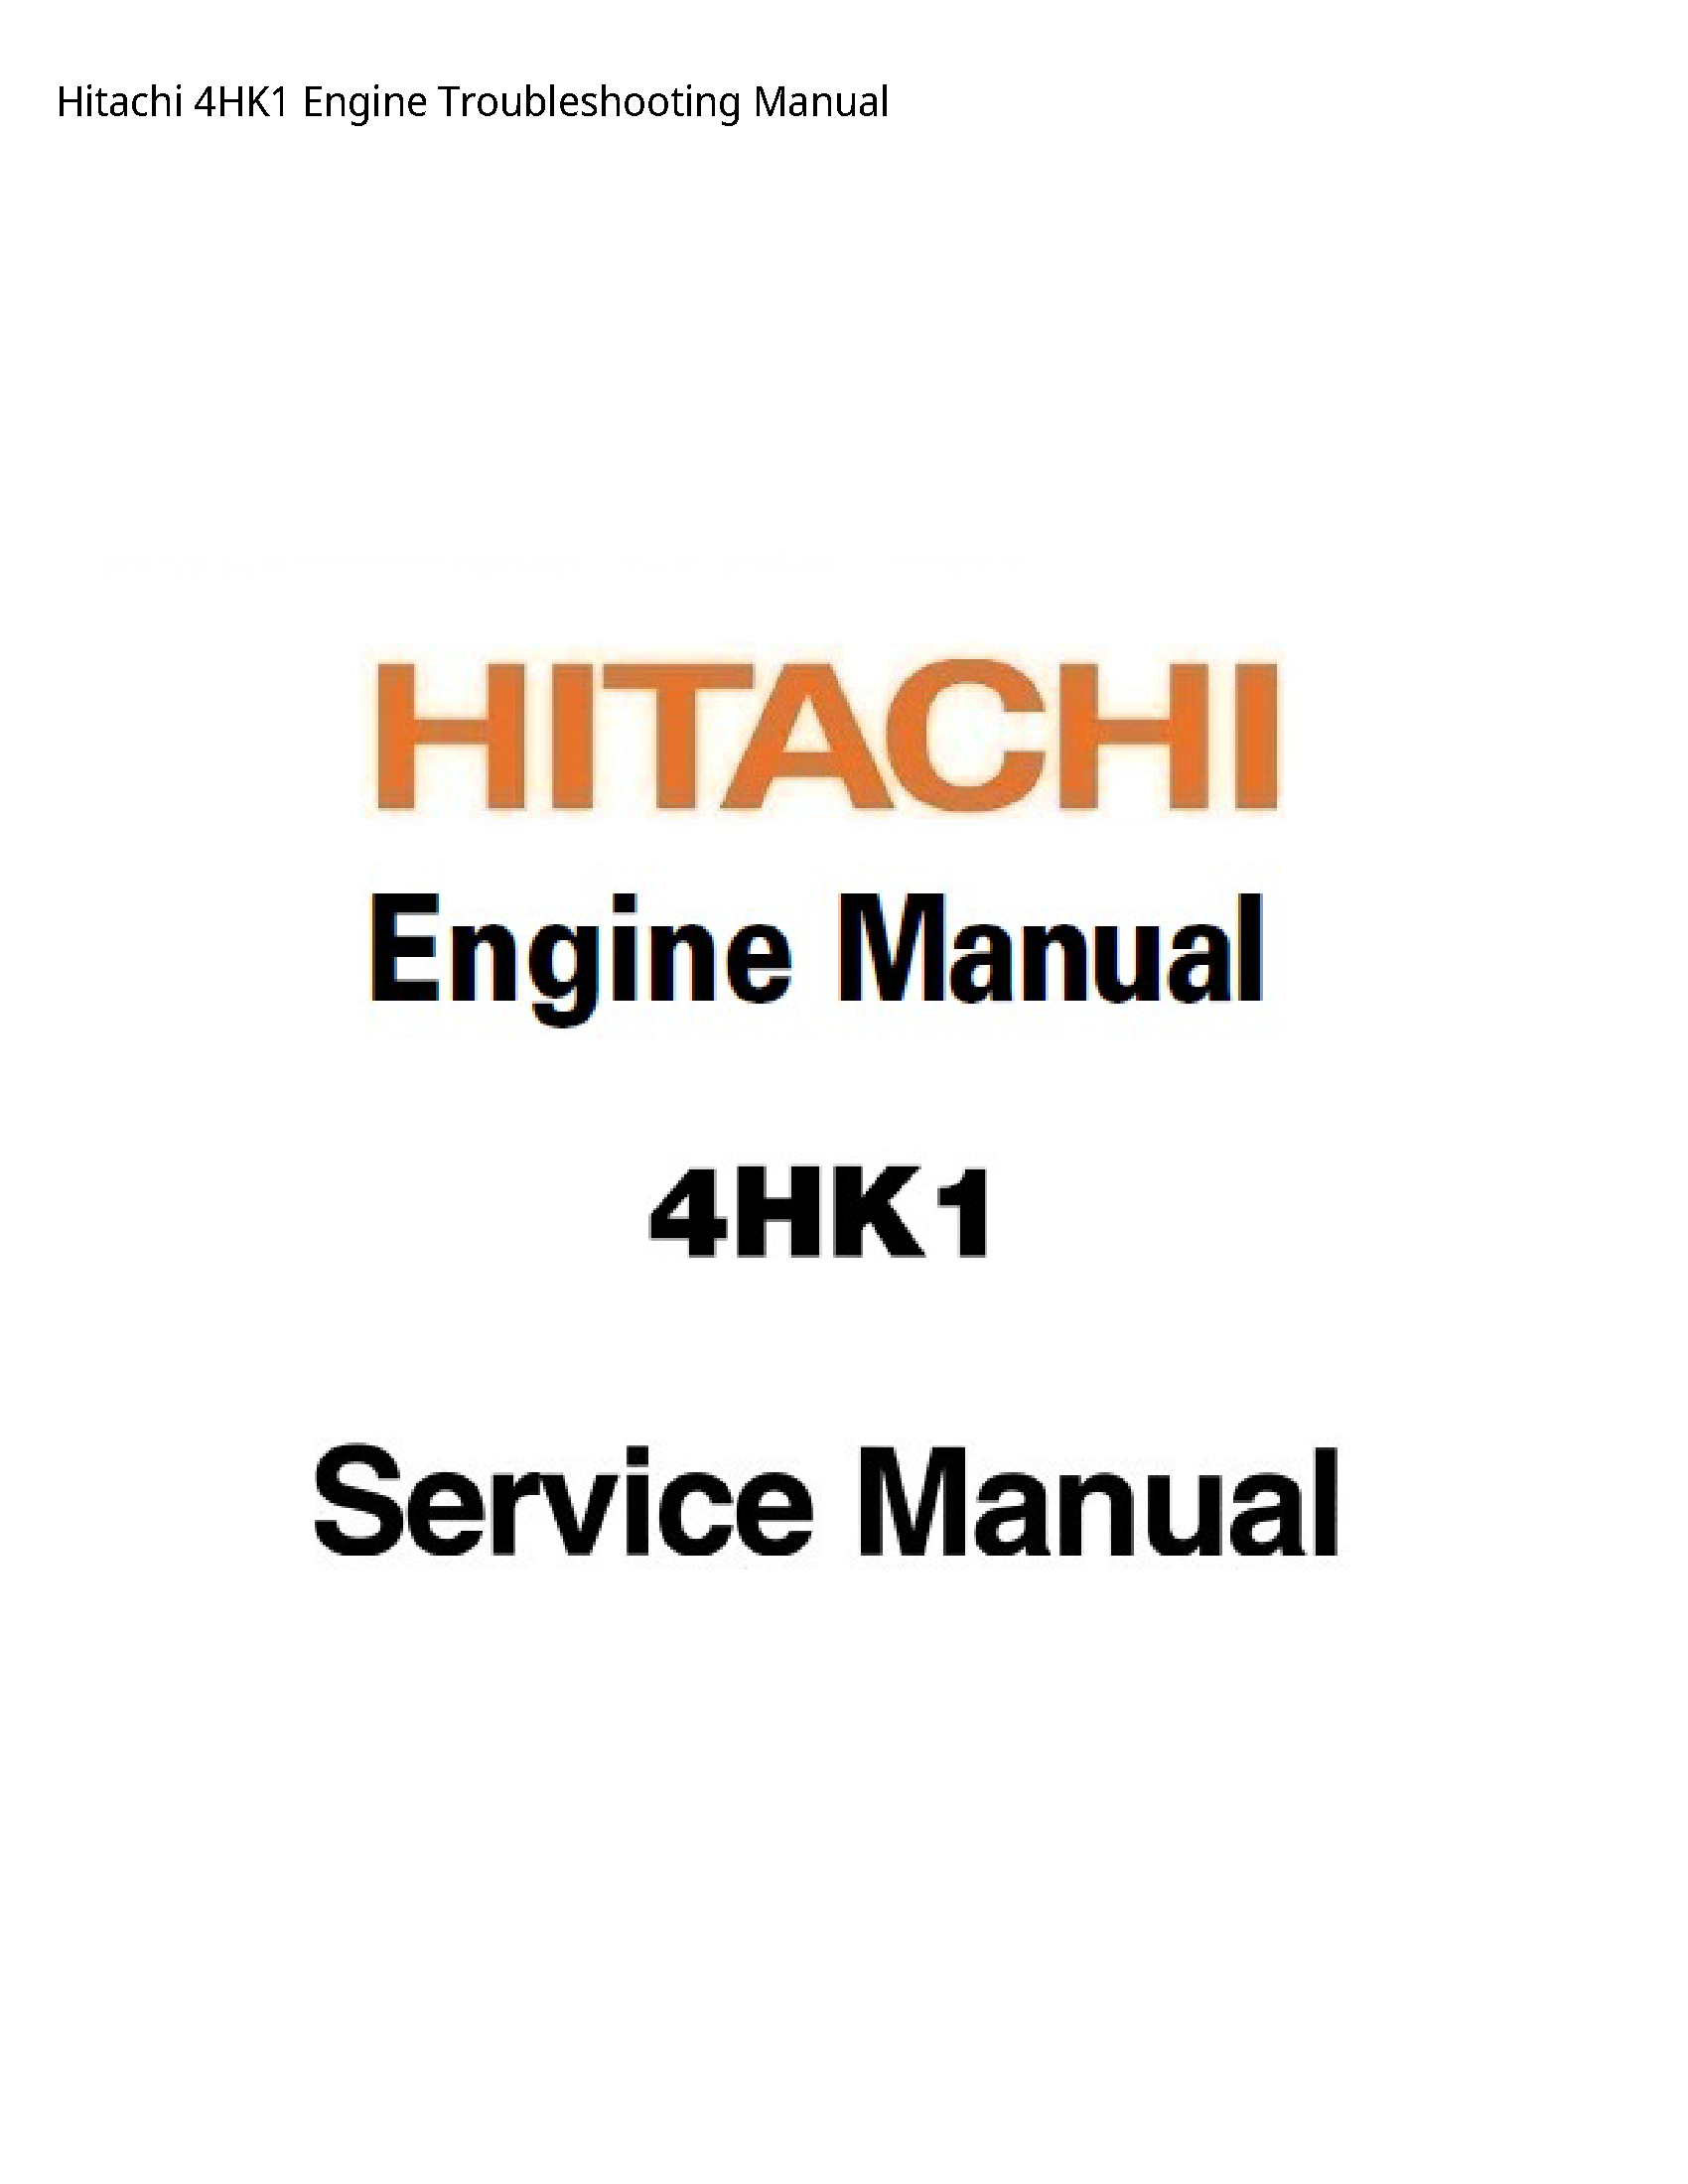 Hitachi 4HK1 Engine Troubleshooting manual